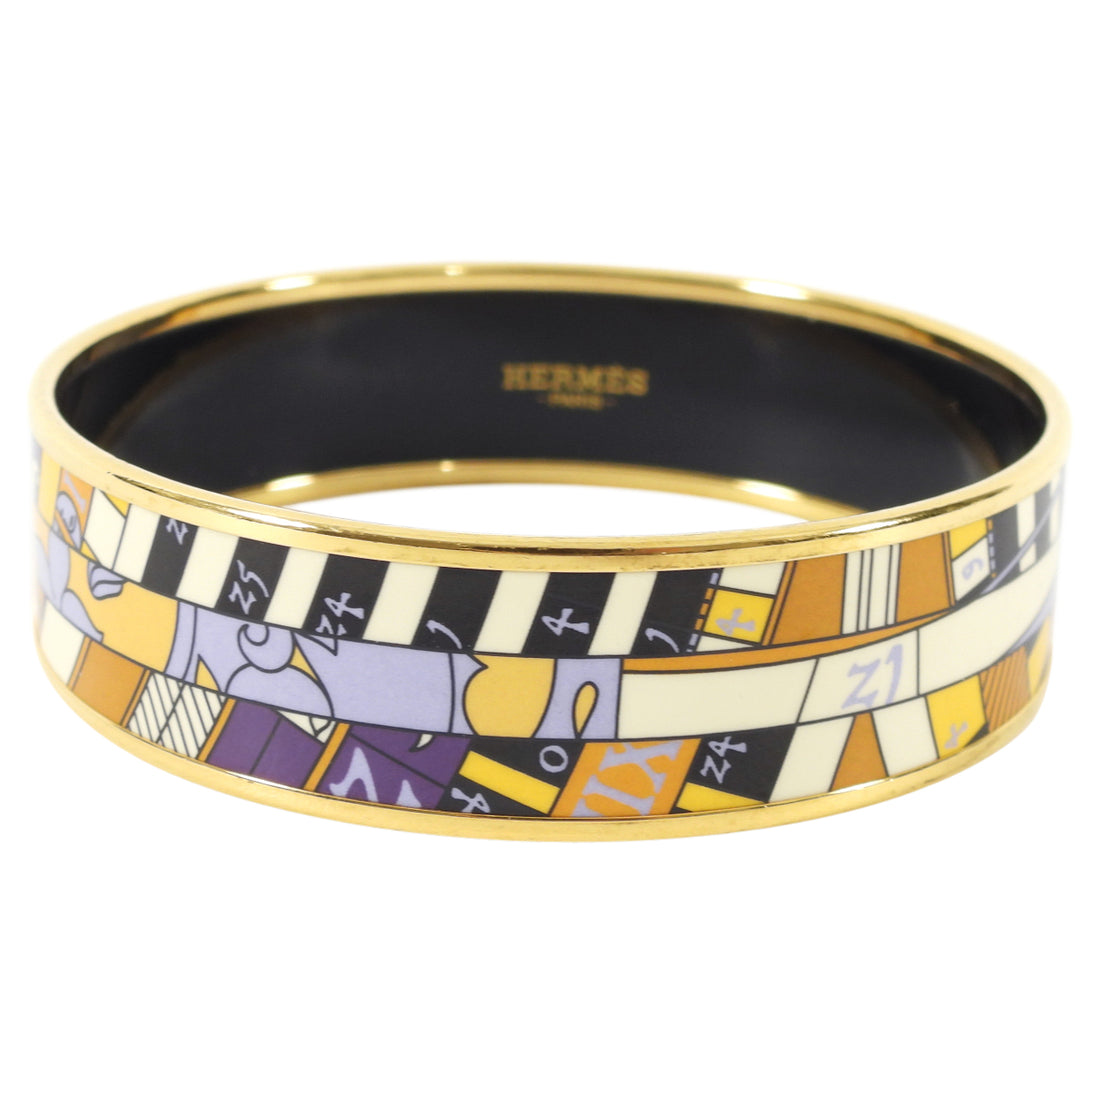 Hermes Printed Enamel Bangle Bracelet Purple Yellow